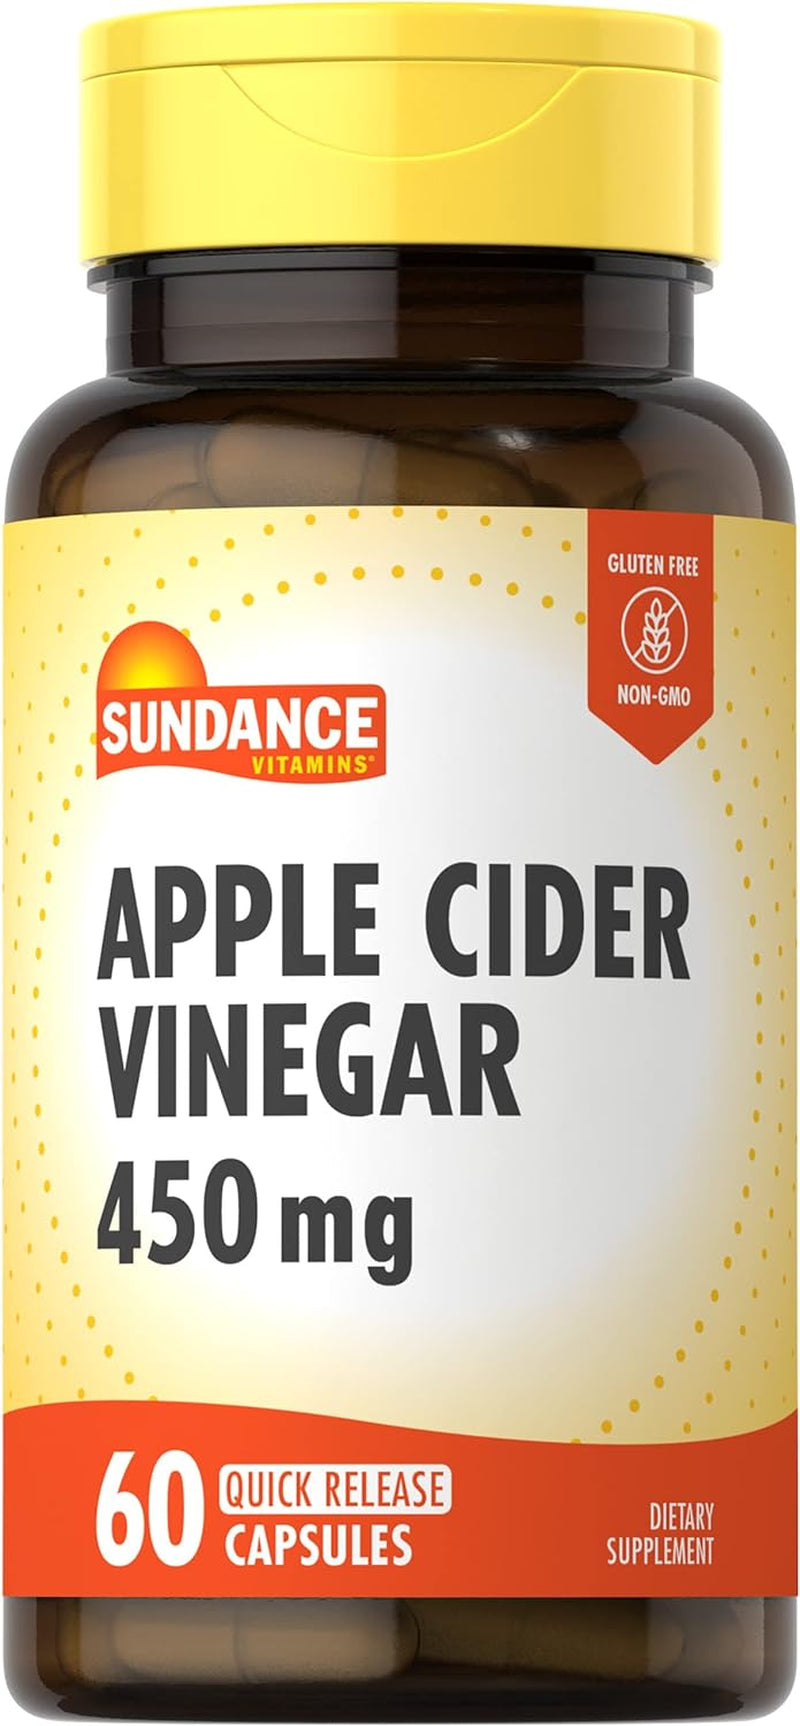 Sundance Apple Cider Vinegar Capsules | 60 Count | Non-Gmo and Gluten Free Supplement